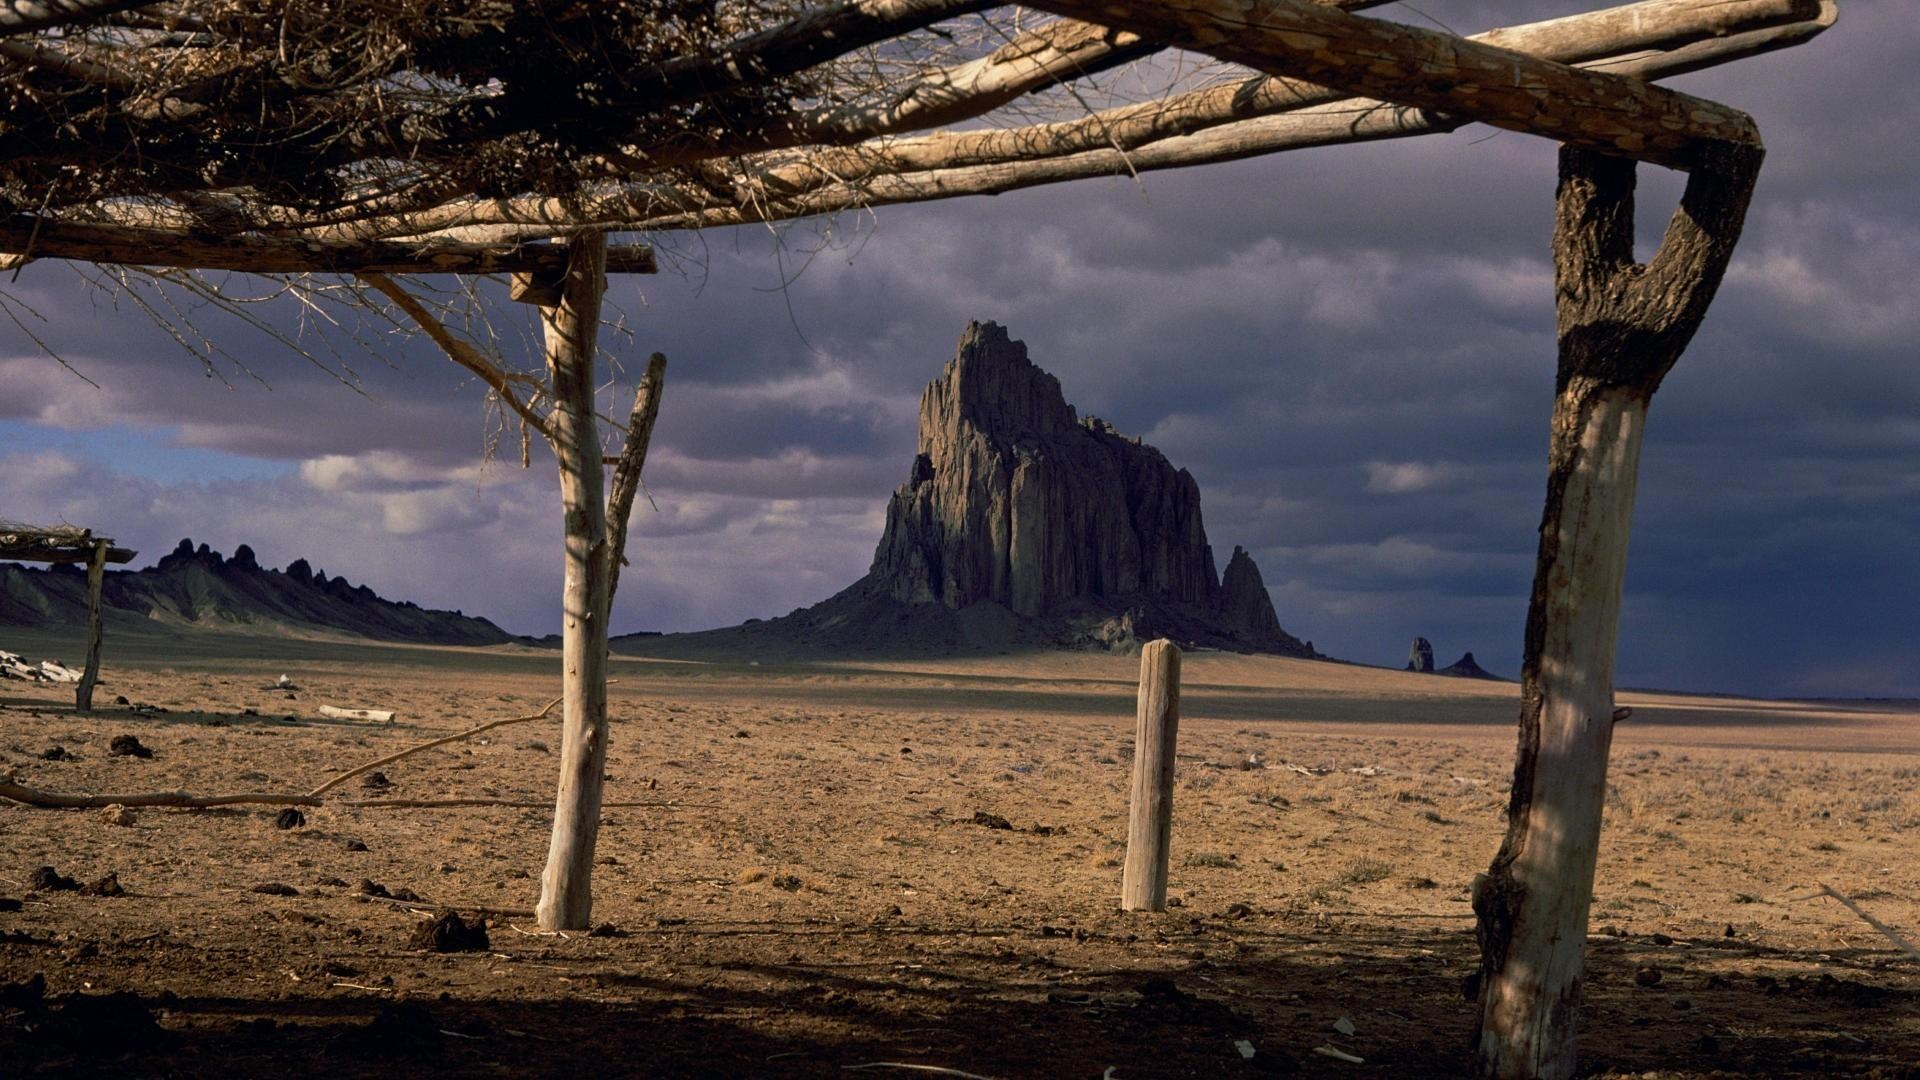 Desert New Mexico wallpapers, Desert beauty, Sandy landscapes, Arid wilderness, 1920x1080 Full HD Desktop